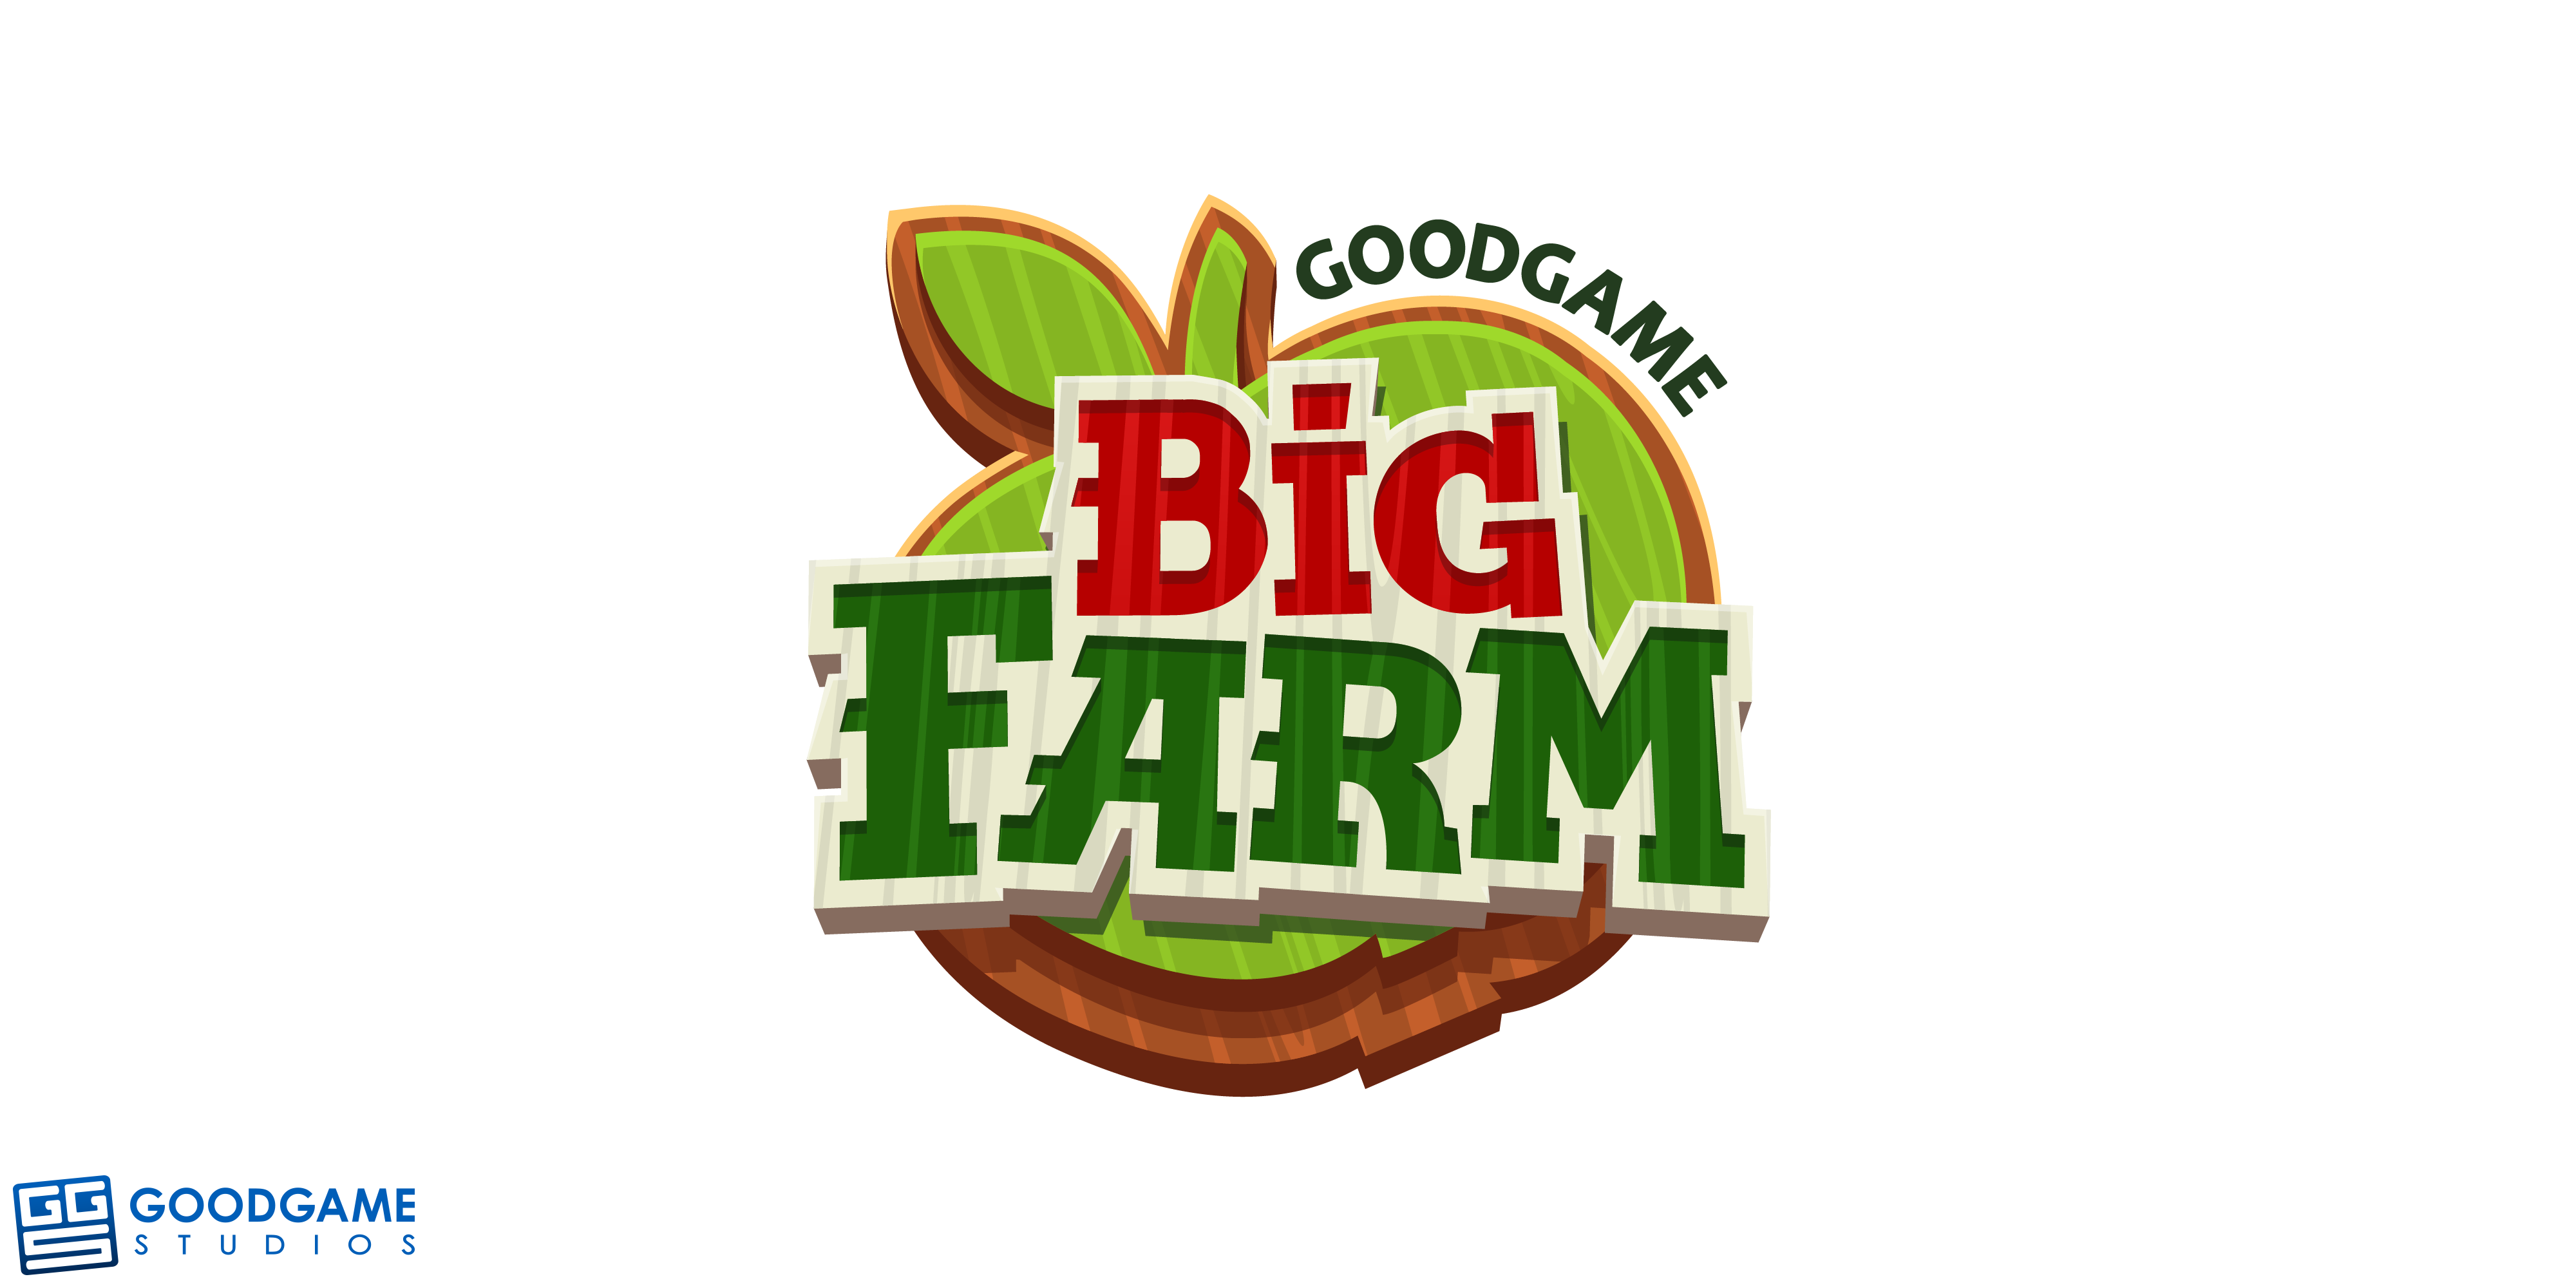 File Goodgame Big Farm Logo Png Wikimedia Commons